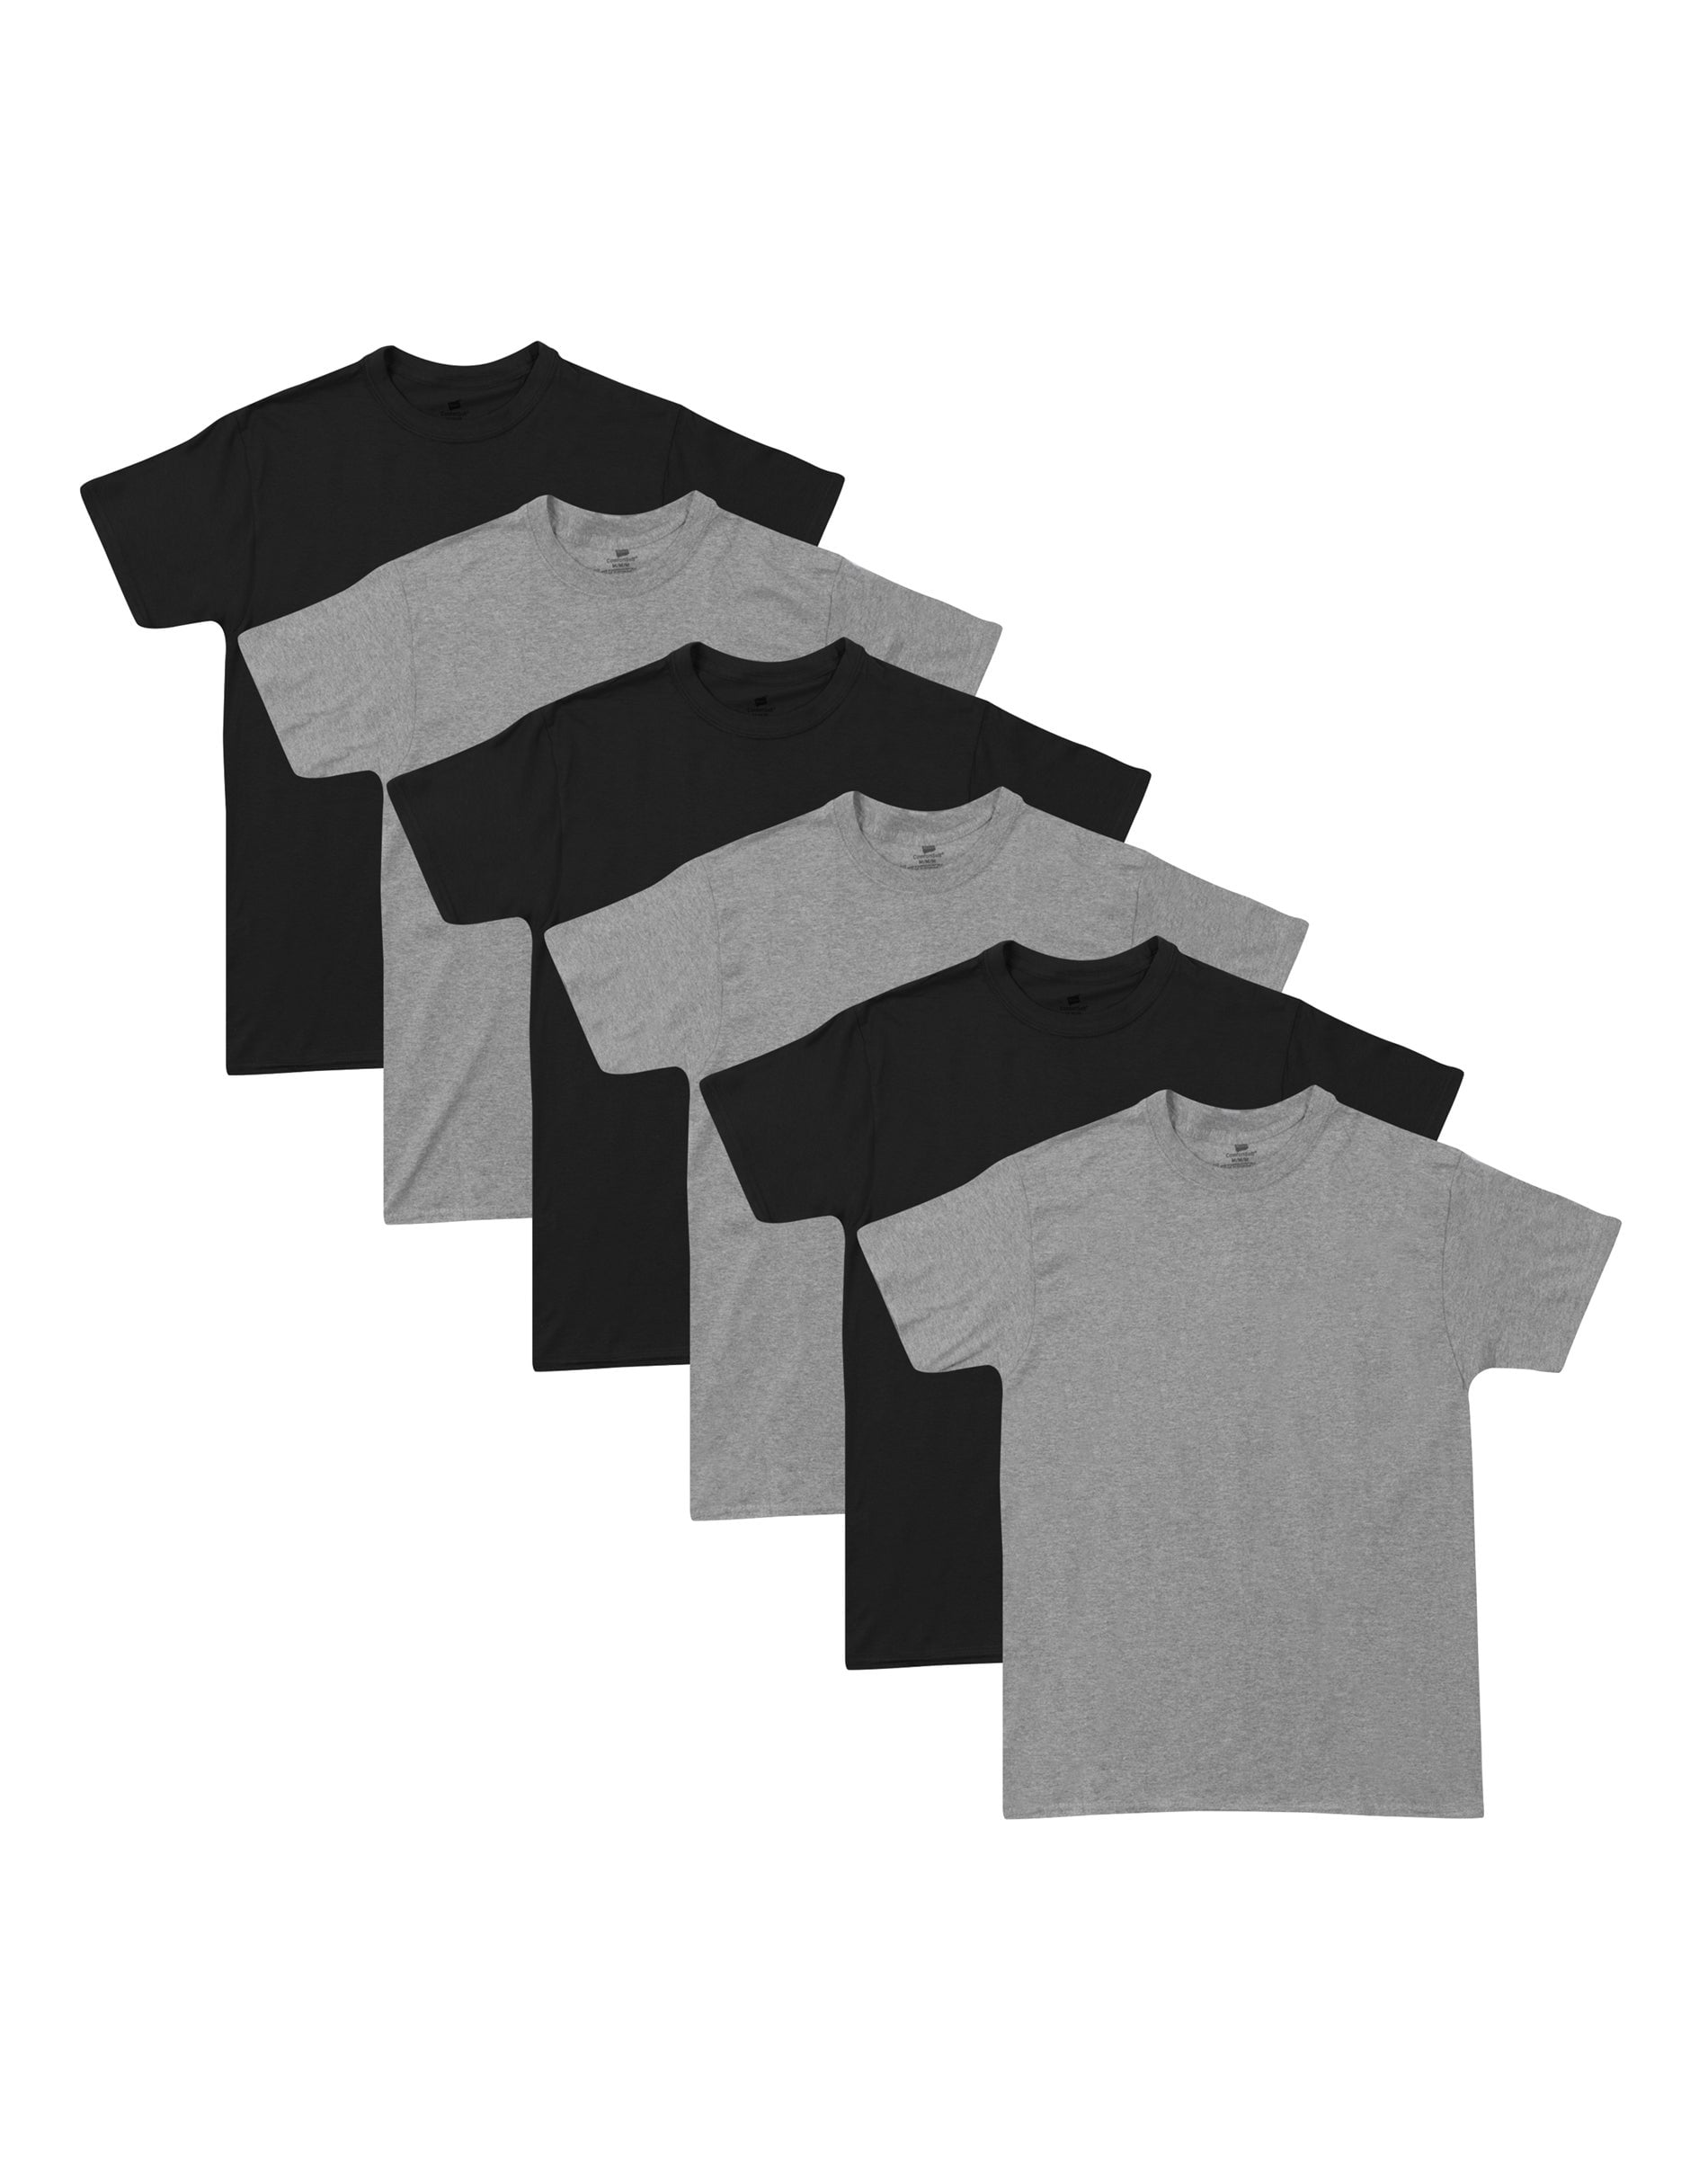 Hanes - Hanes Men's Value Pack Assorted Crew T-Shirt Undershirts, 6 ...